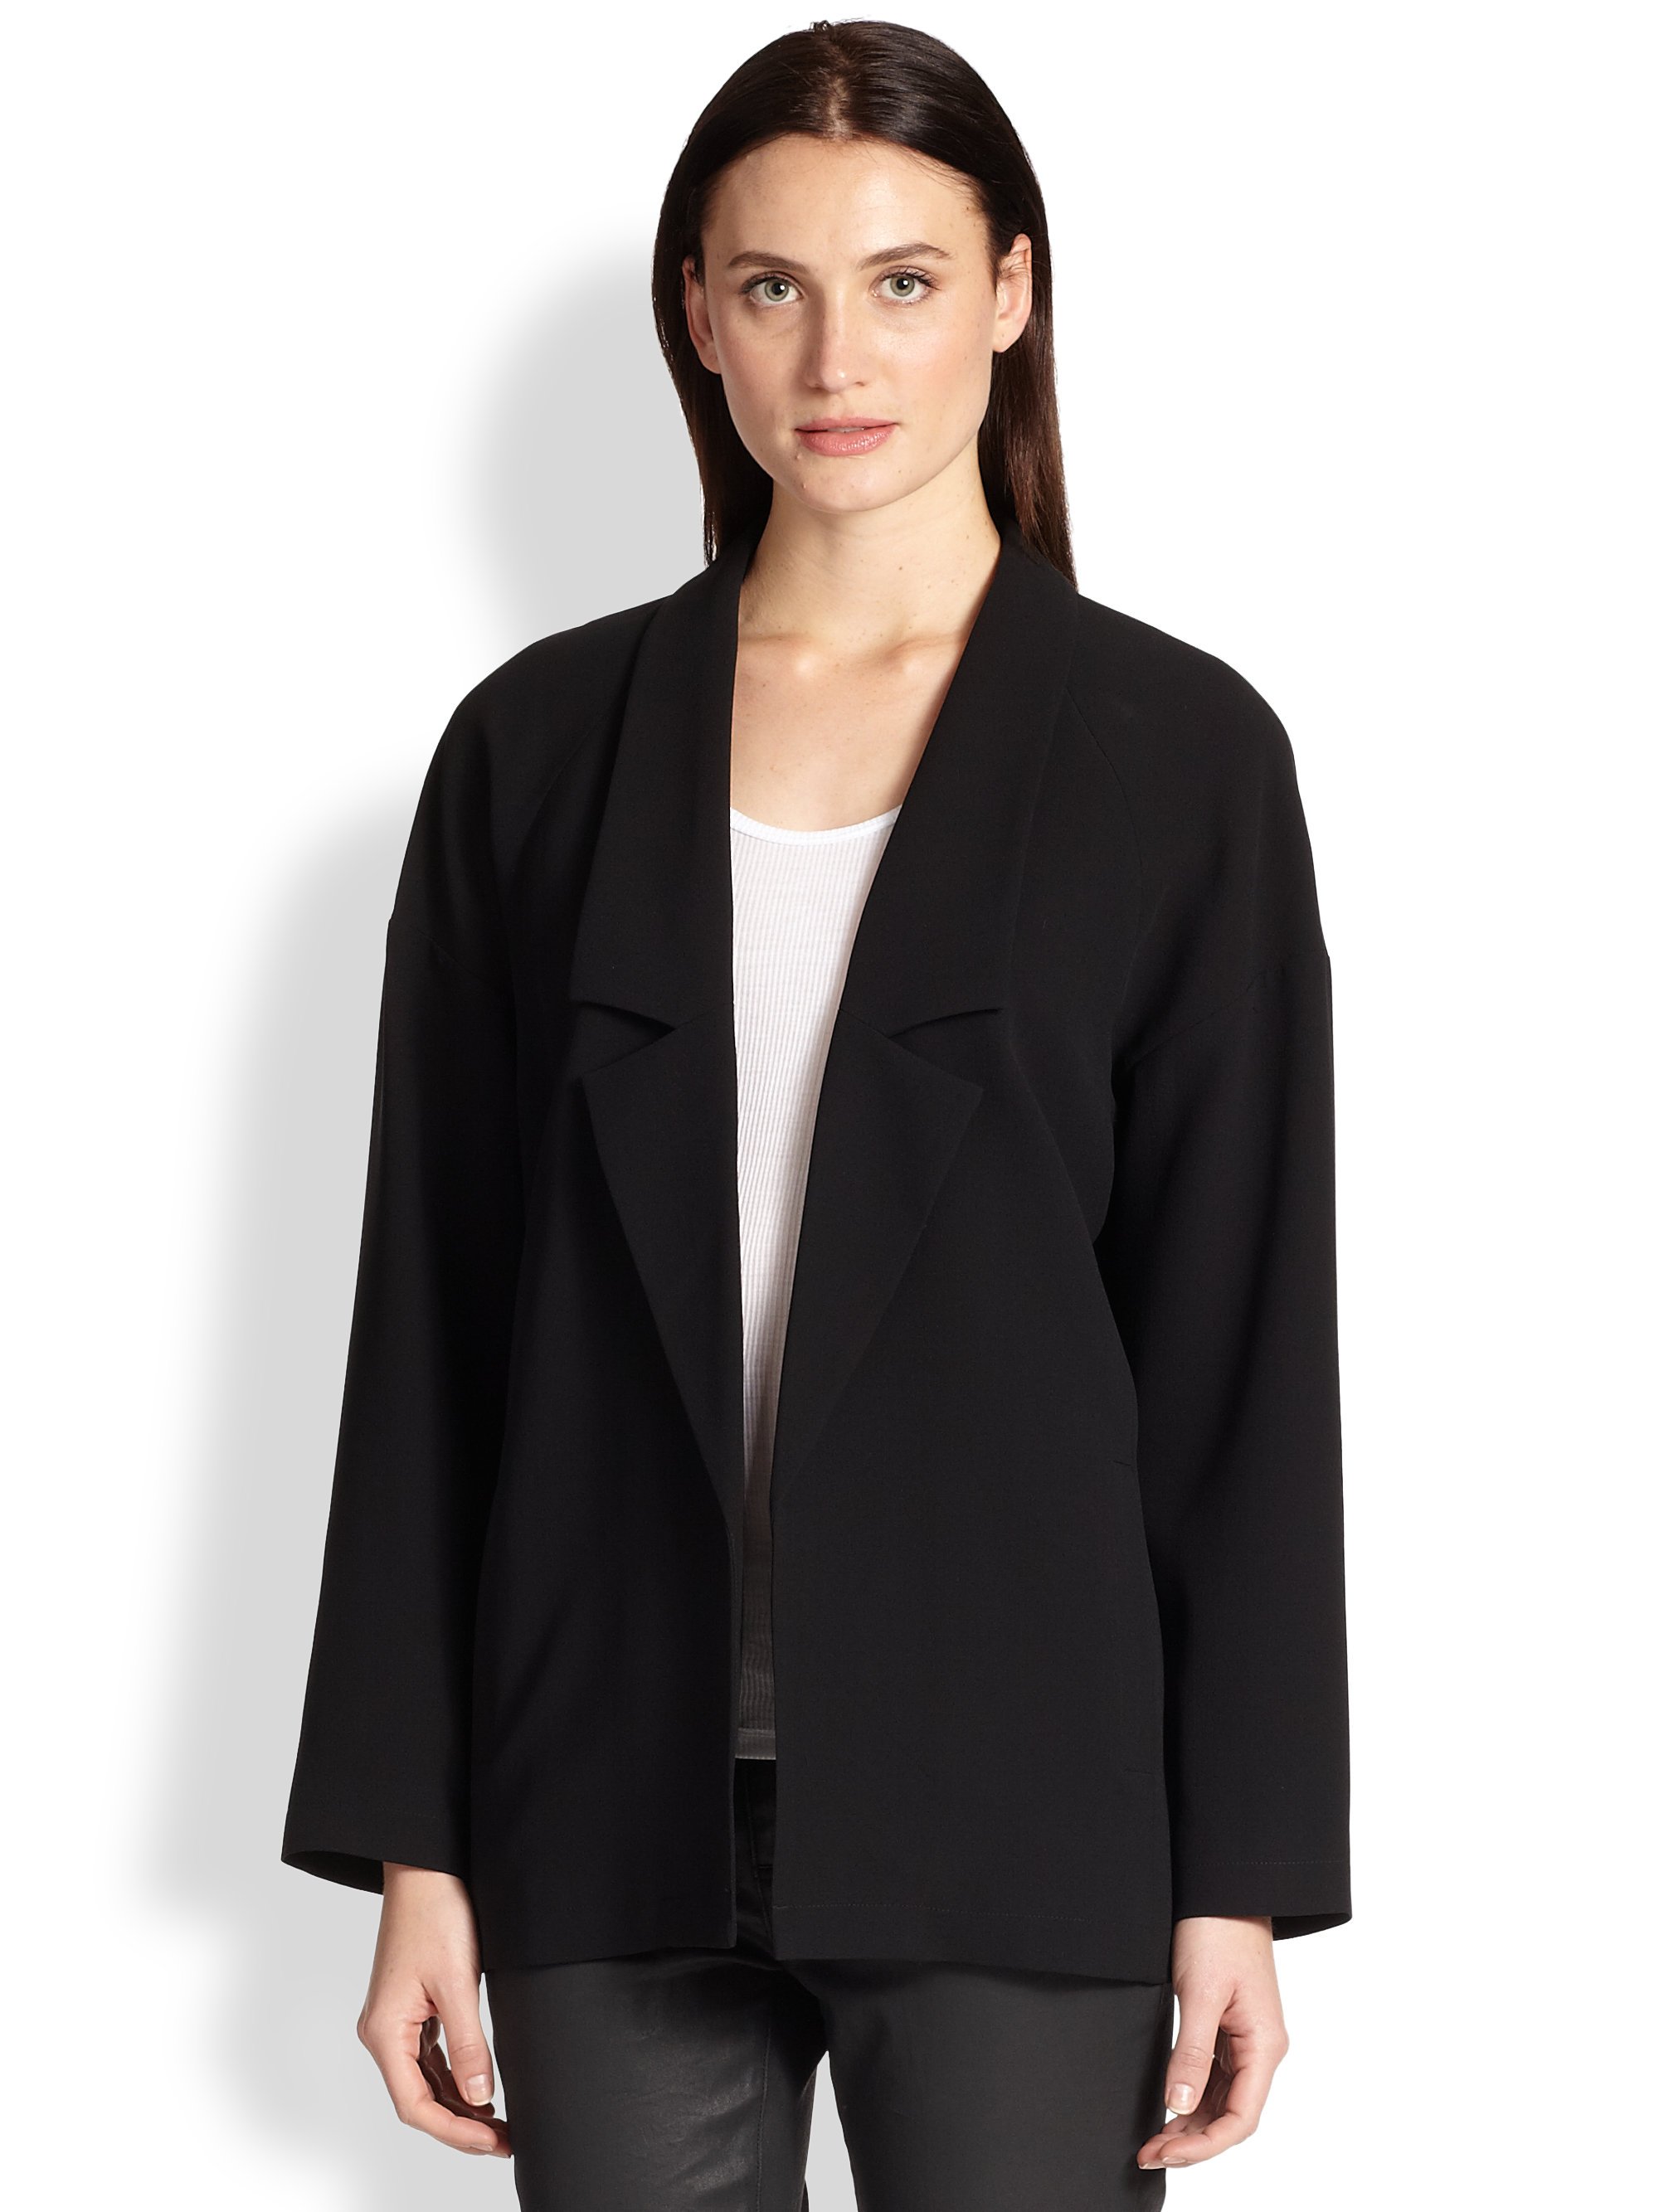 Lyst - Eileen Fisher Open-Front Silk Crepe Jacket in Black